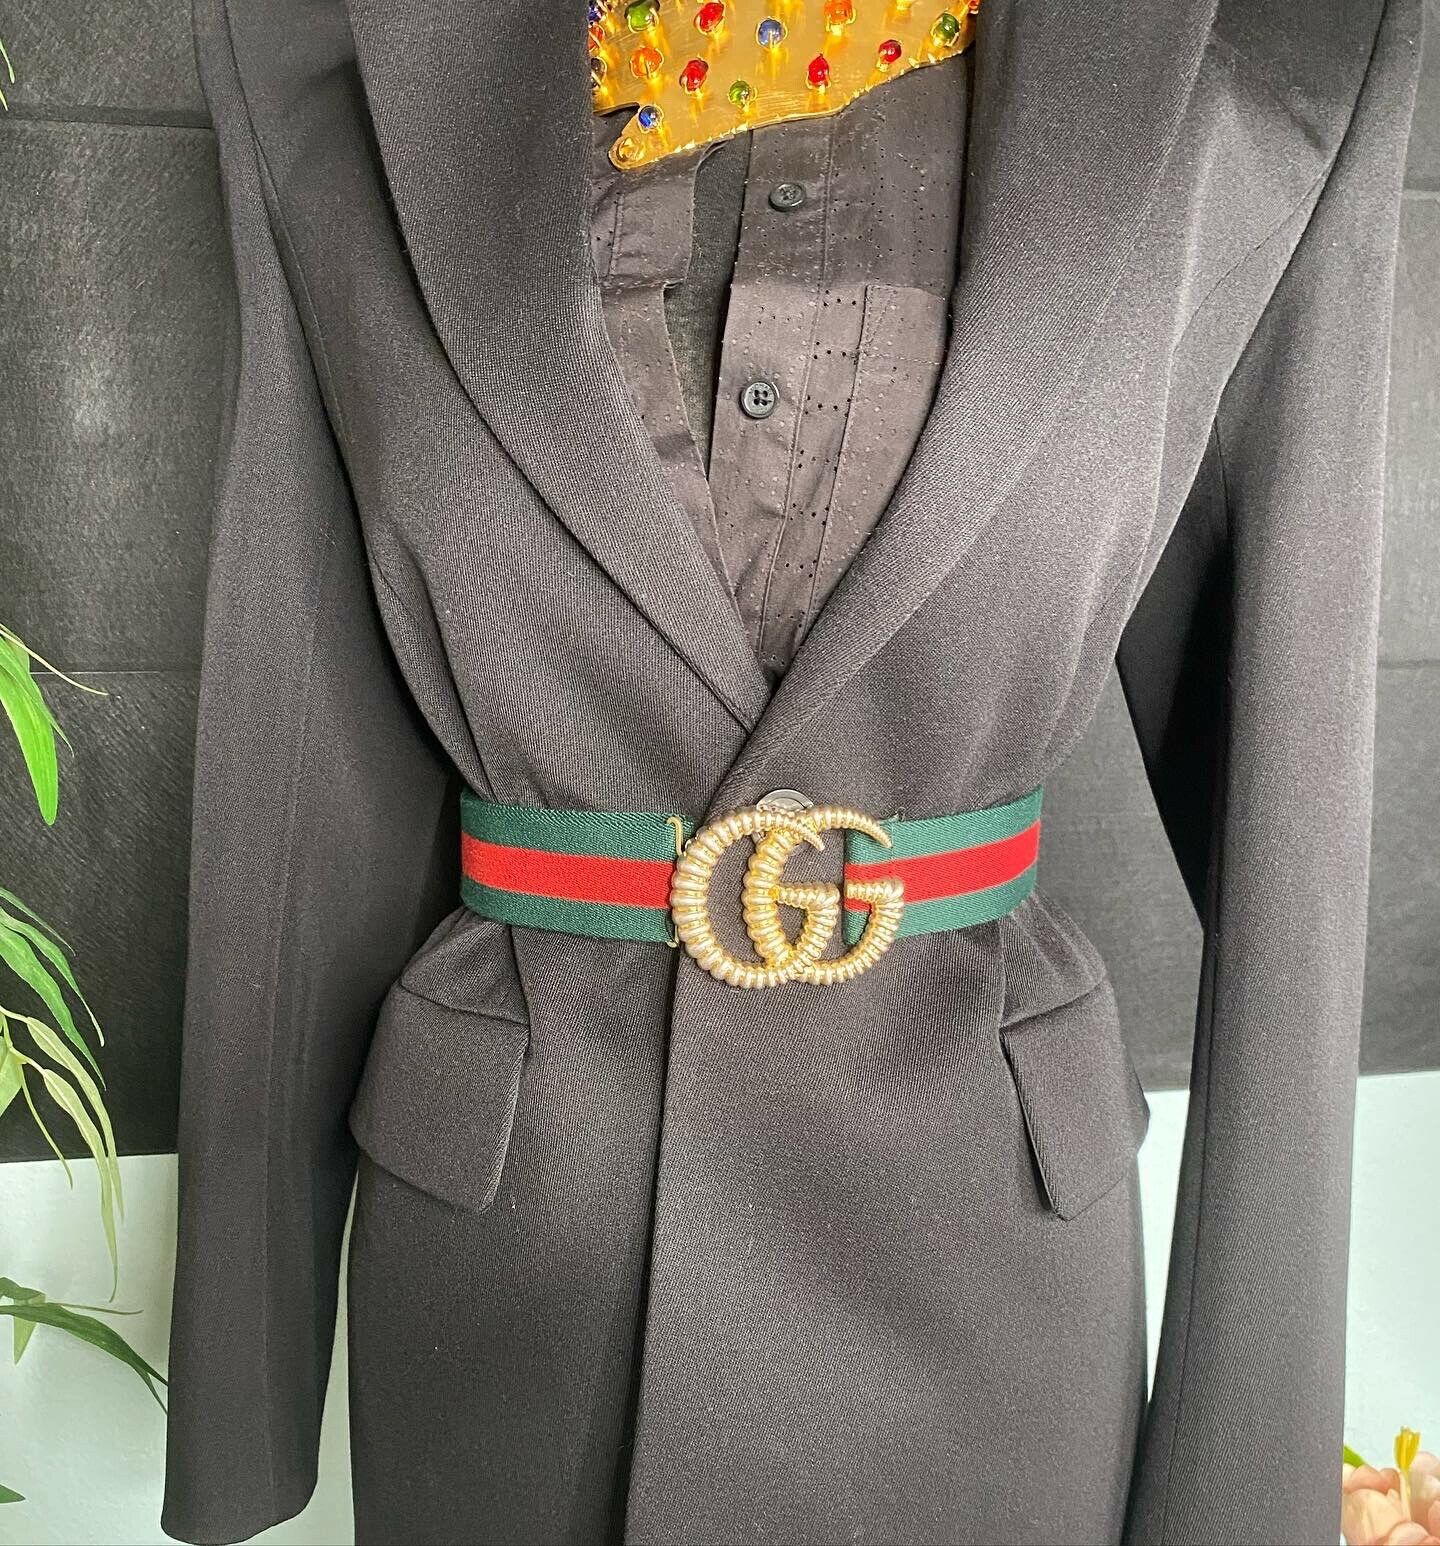 New gg belts !🌈🌟 over 7+ colors to chose from. #buchifresa #fresita